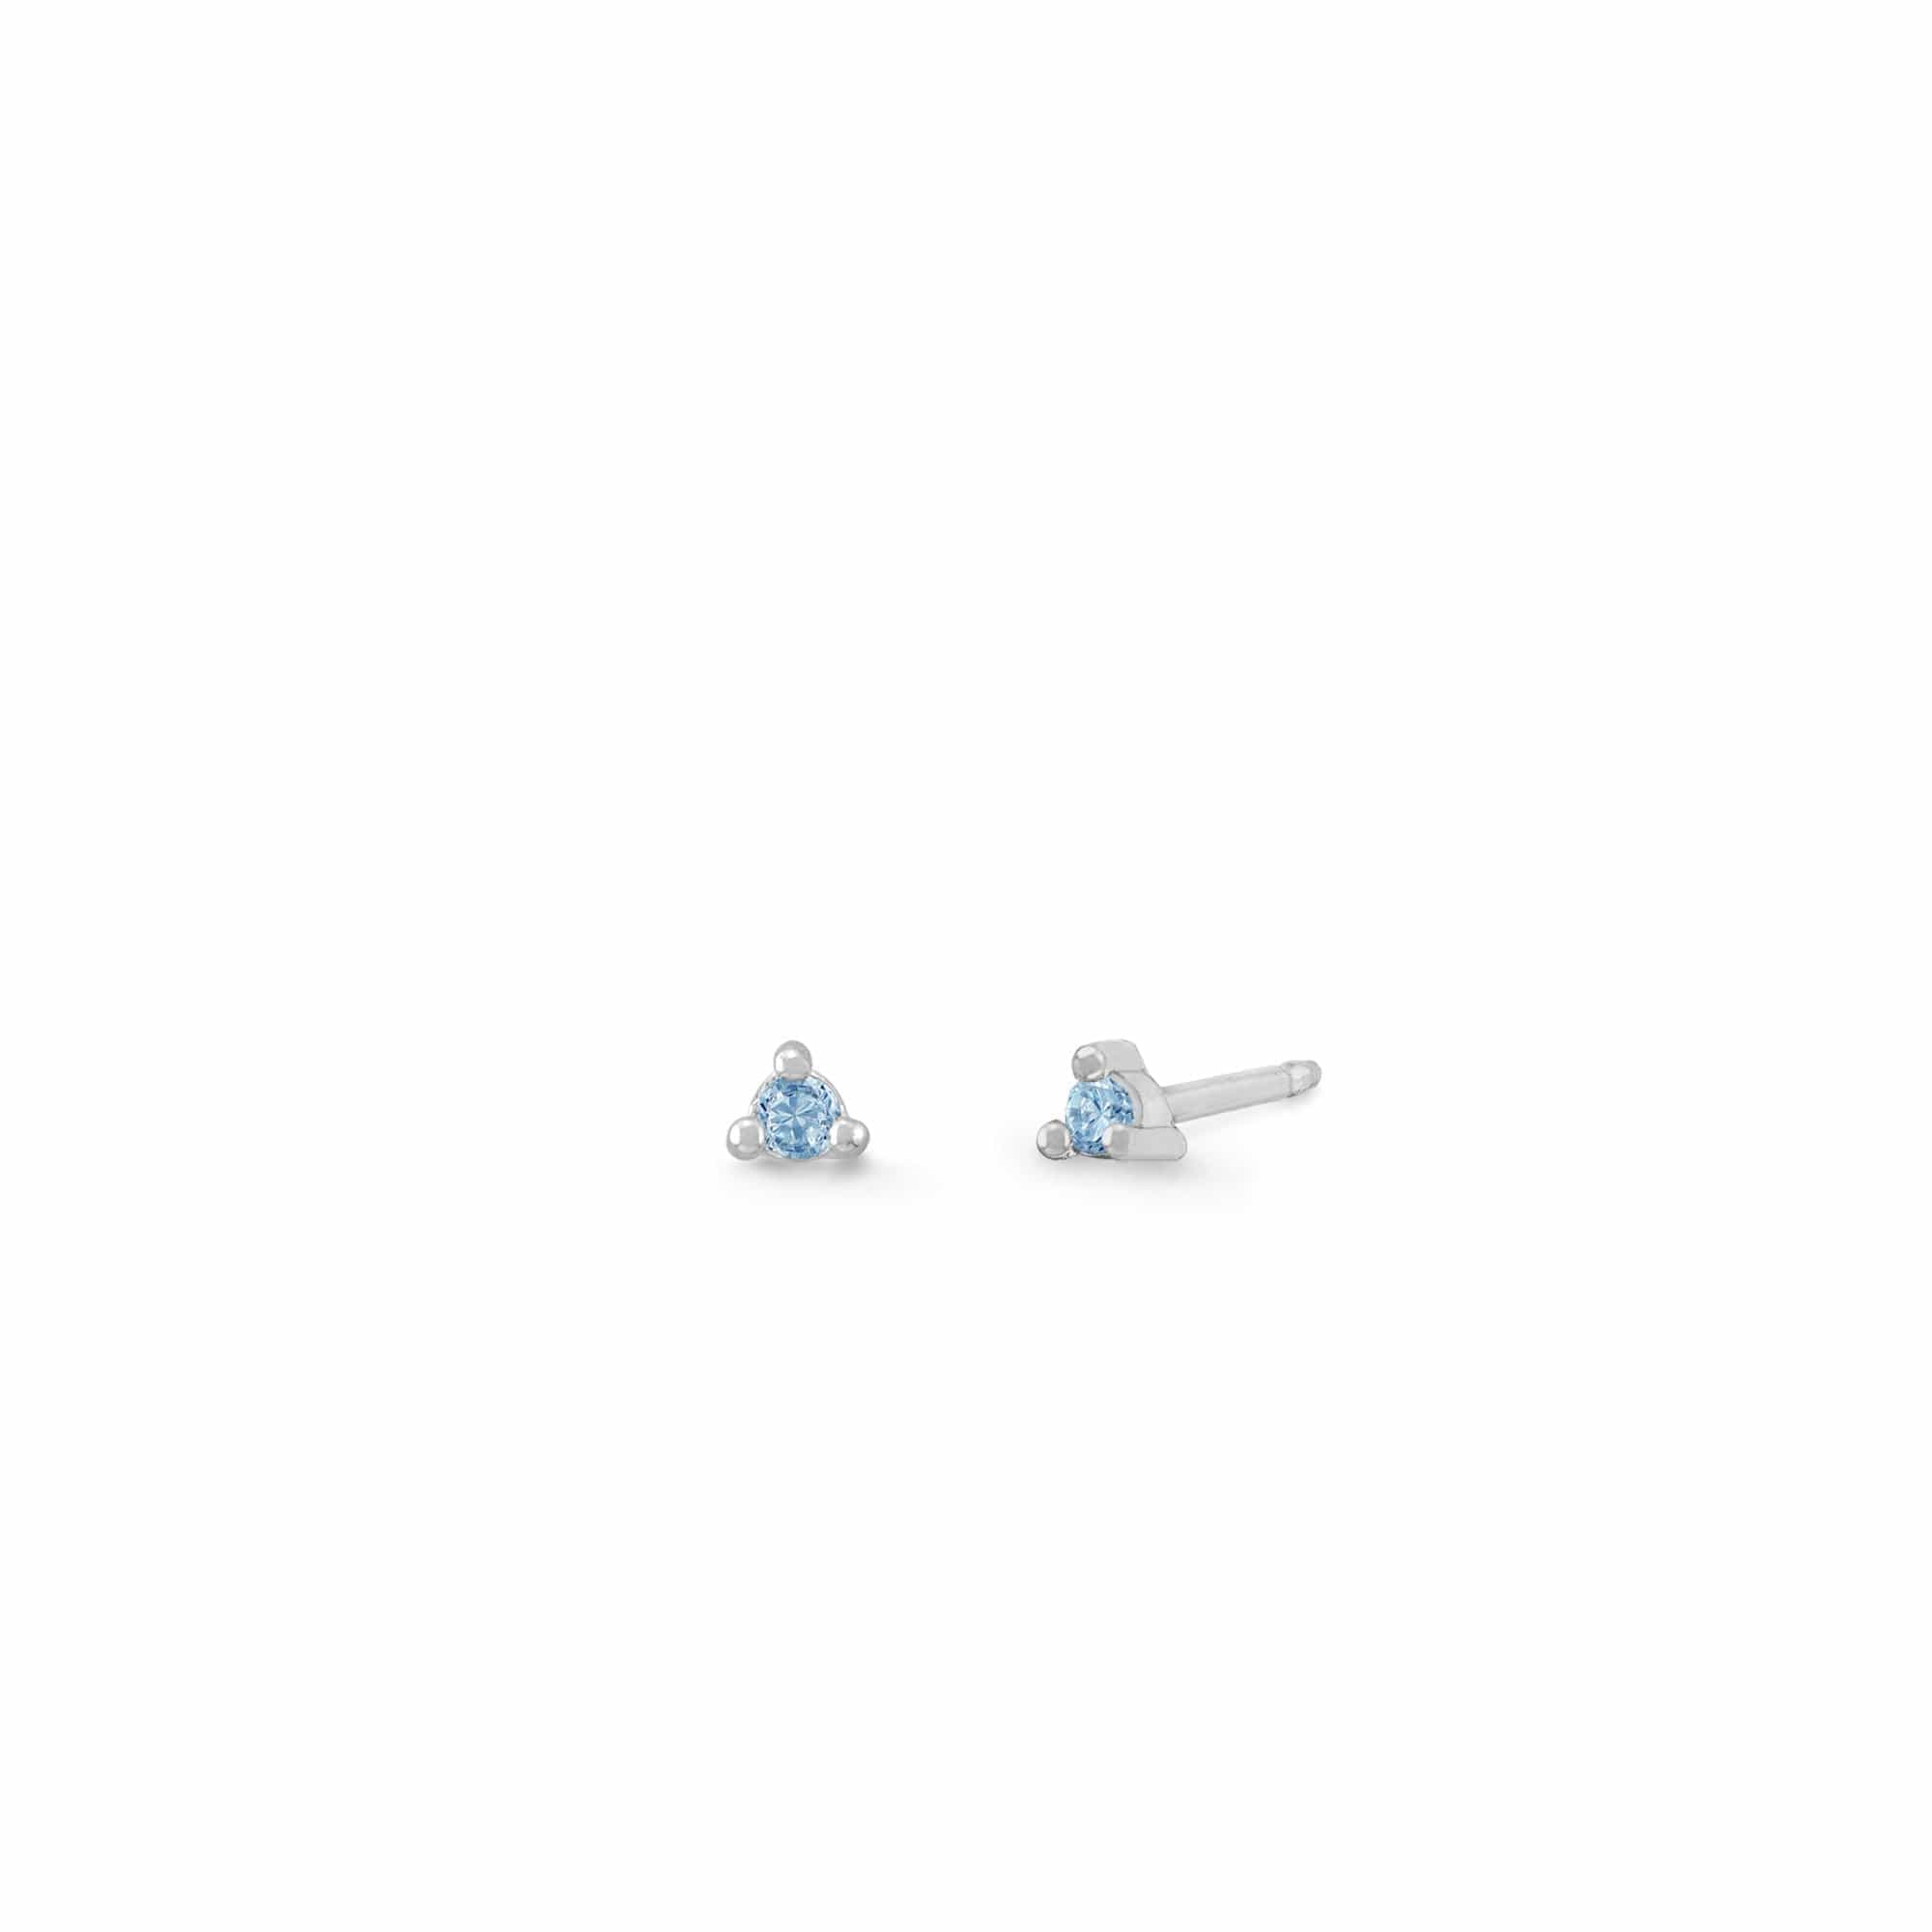 Boma Jewelry Earrings Blue Topaz / Sterling Silver Mini Gemstone Studs